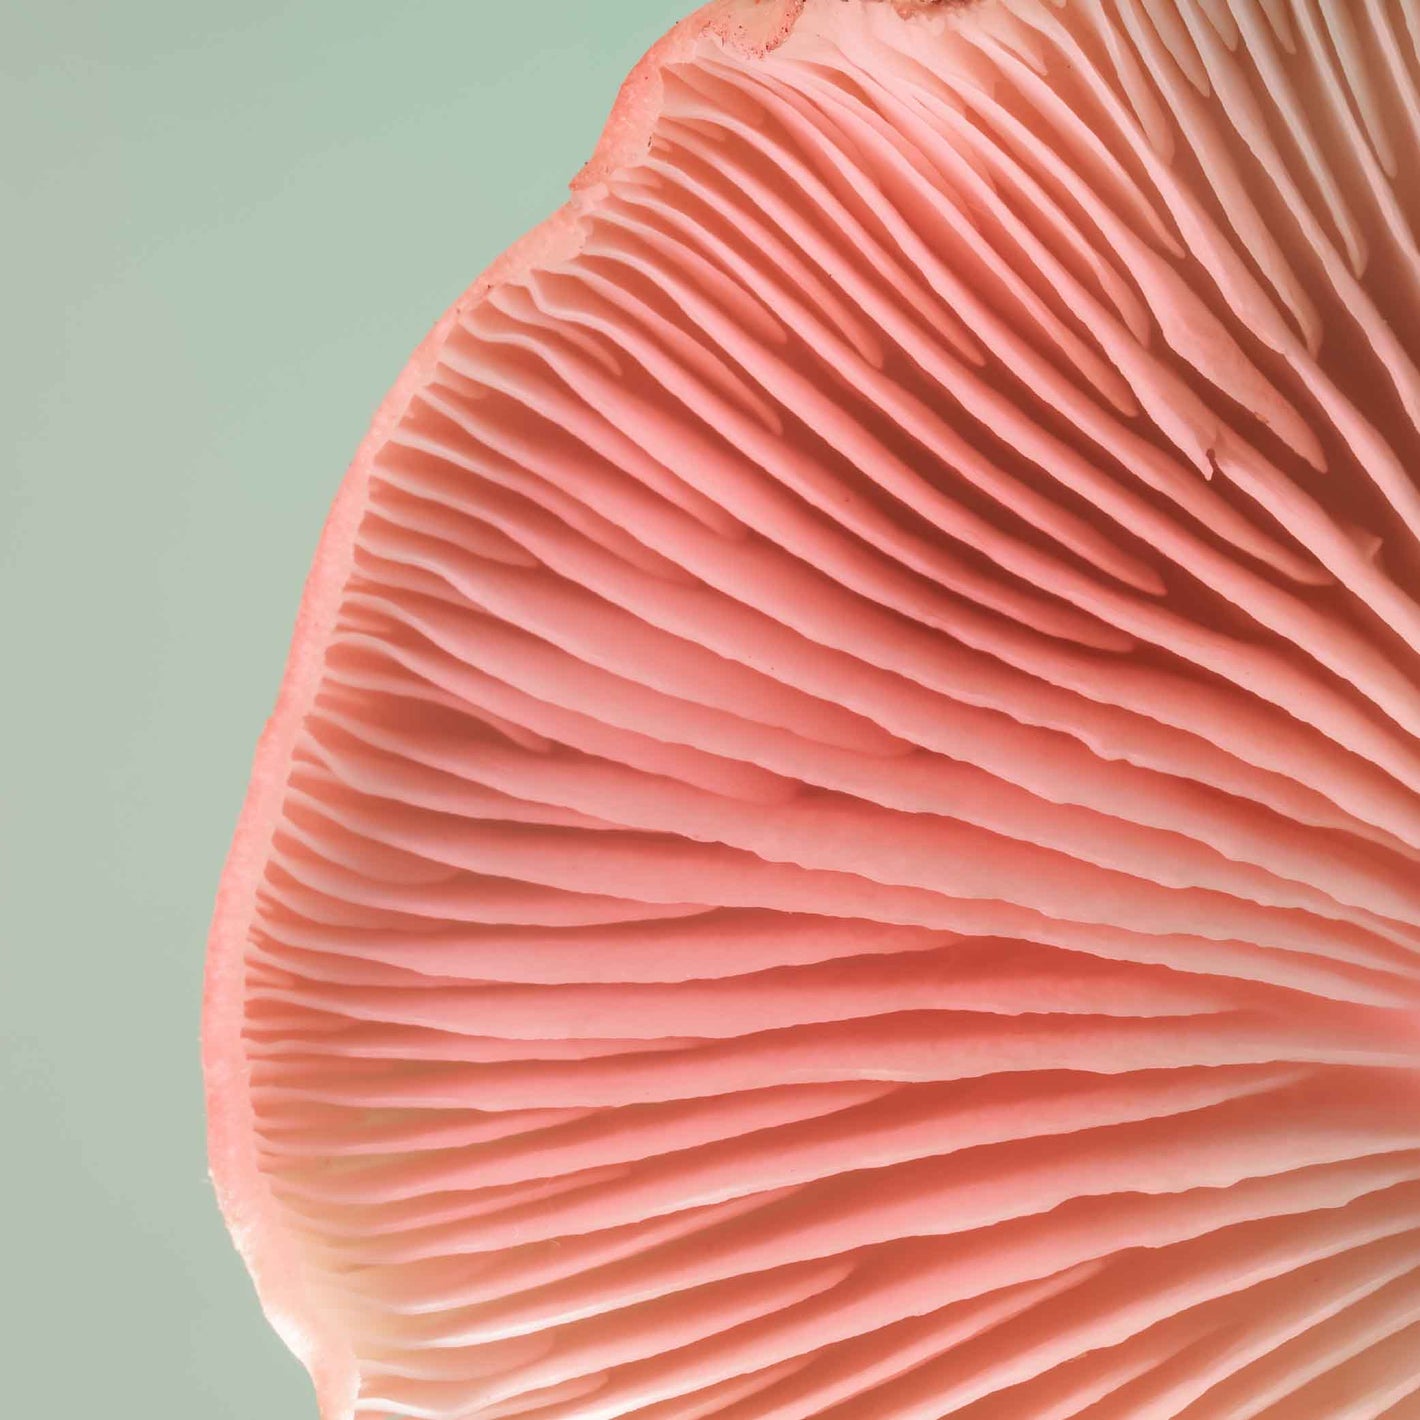 Underneath of a pink fermented mushroom.